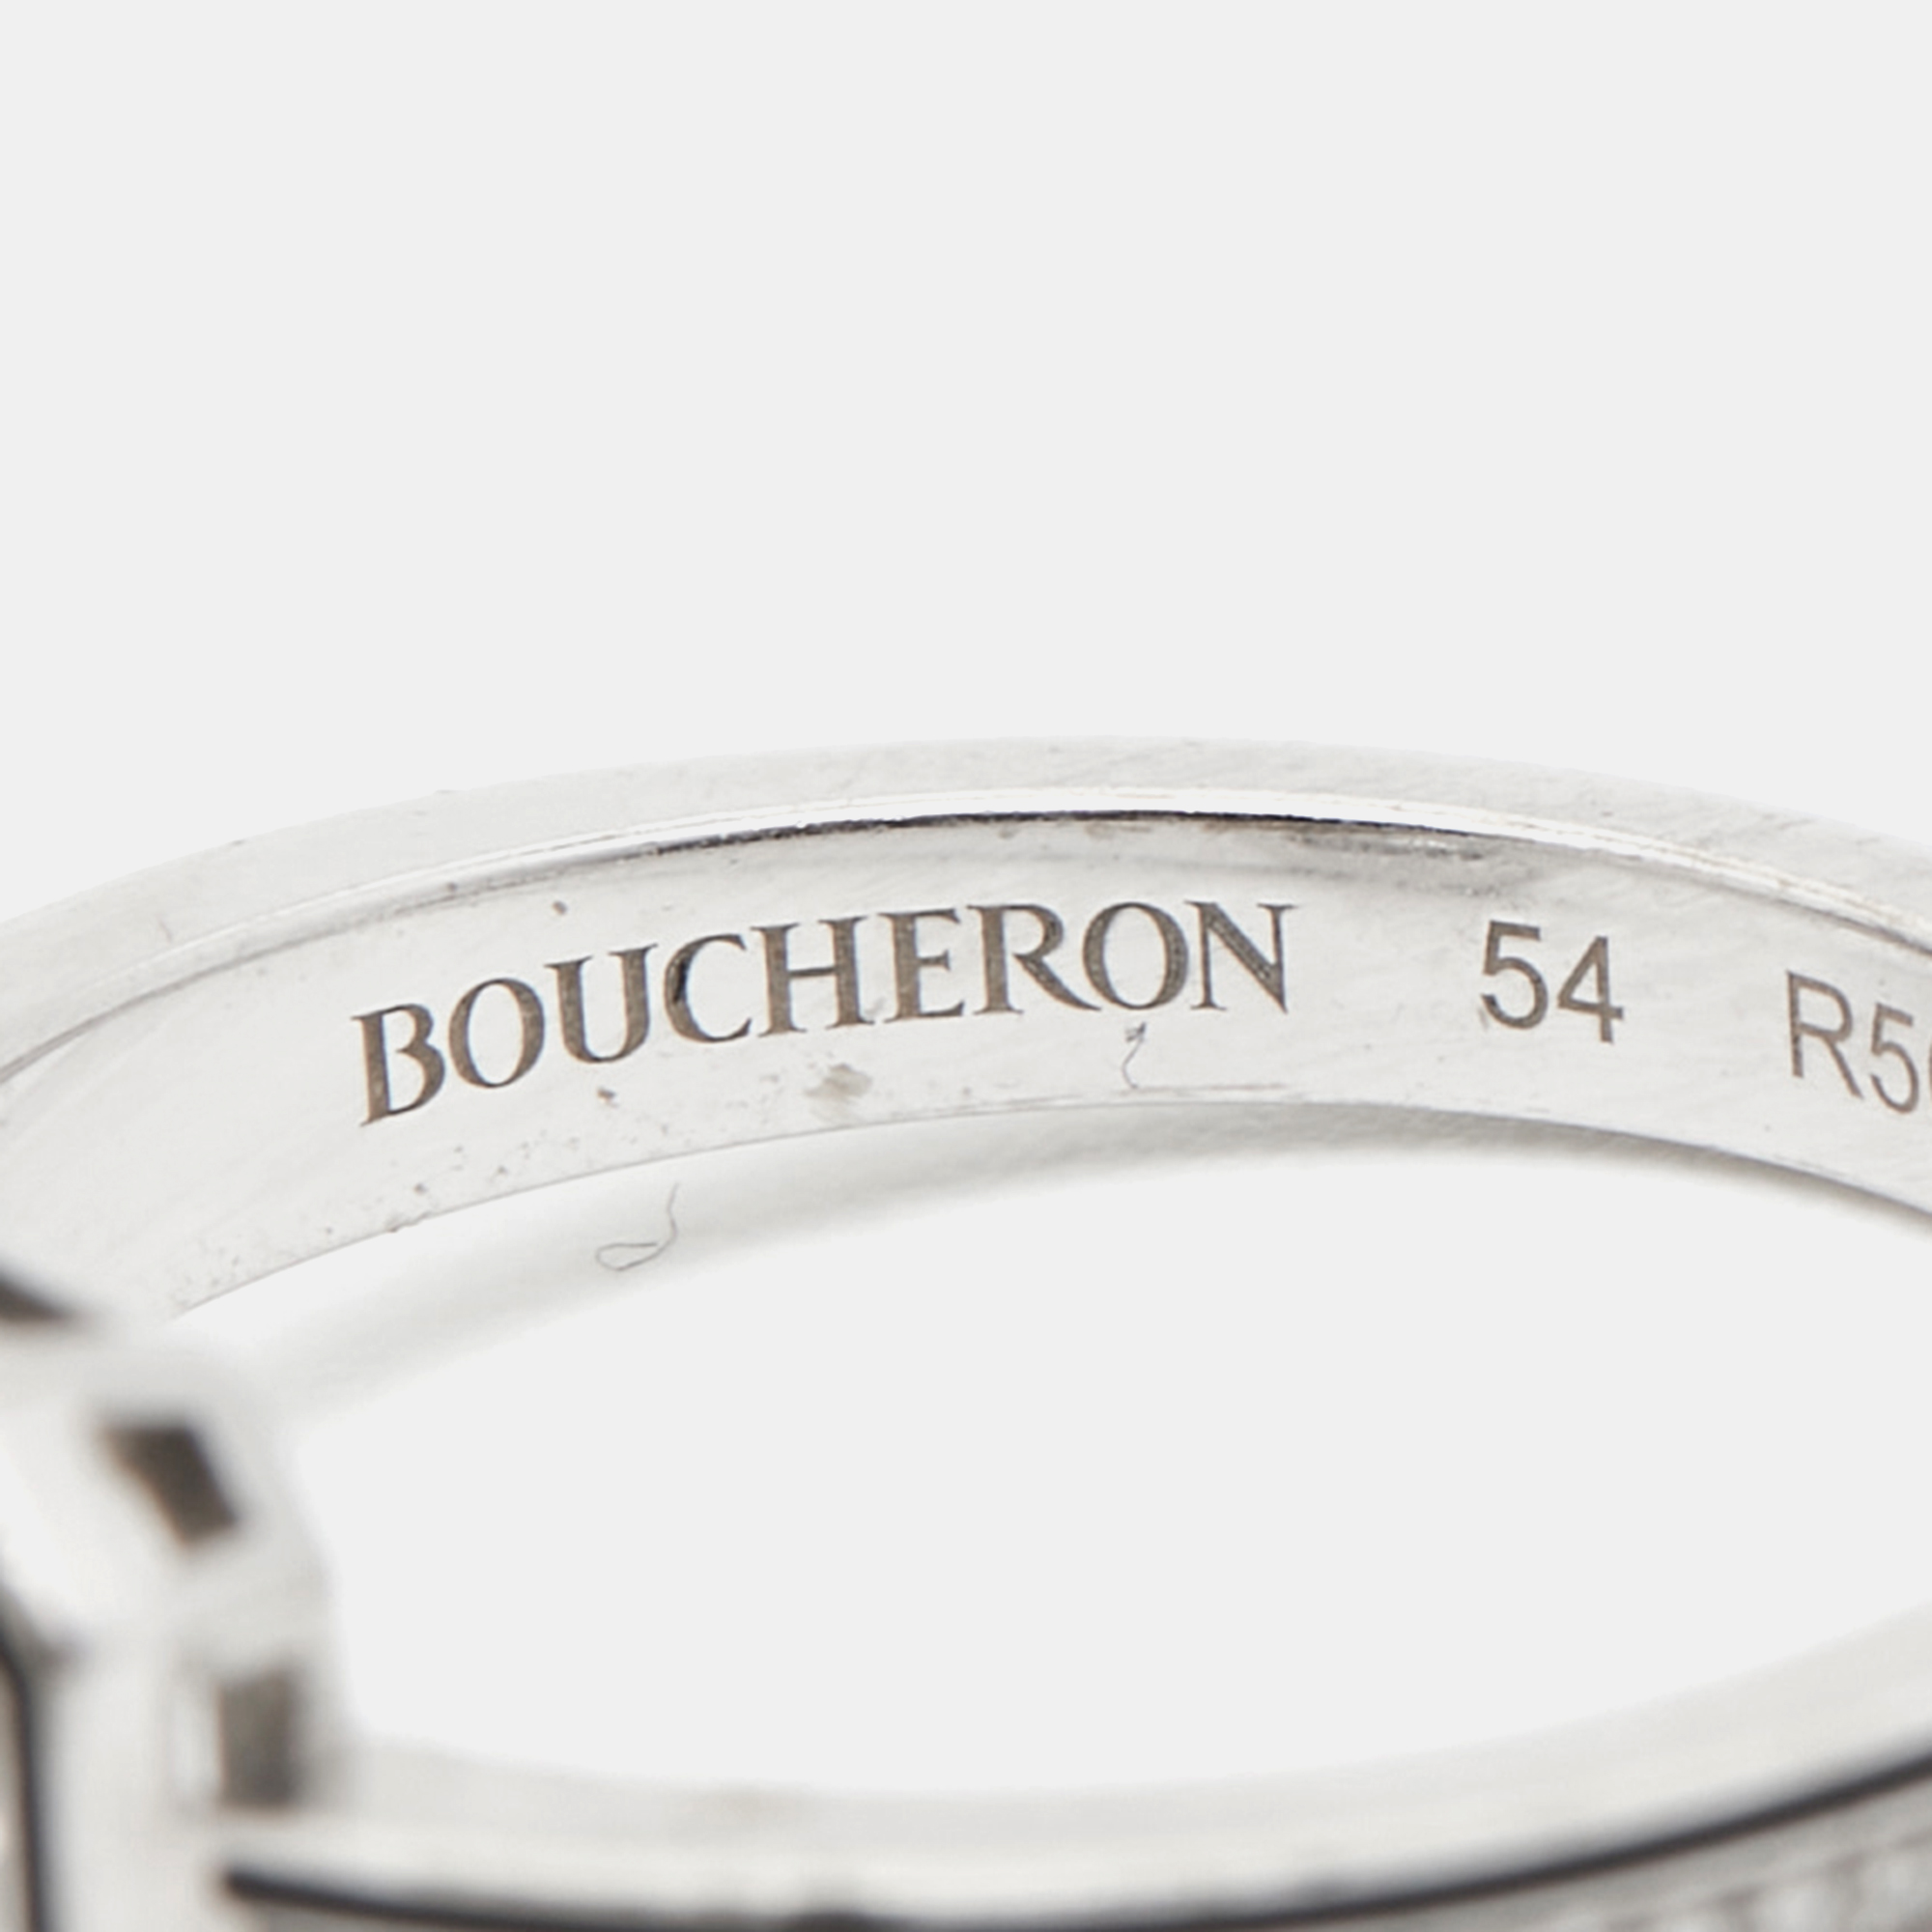 Boucheron Vendôme Liseré Diamonds Black Lacquer 18k White Gold Ring Size 54